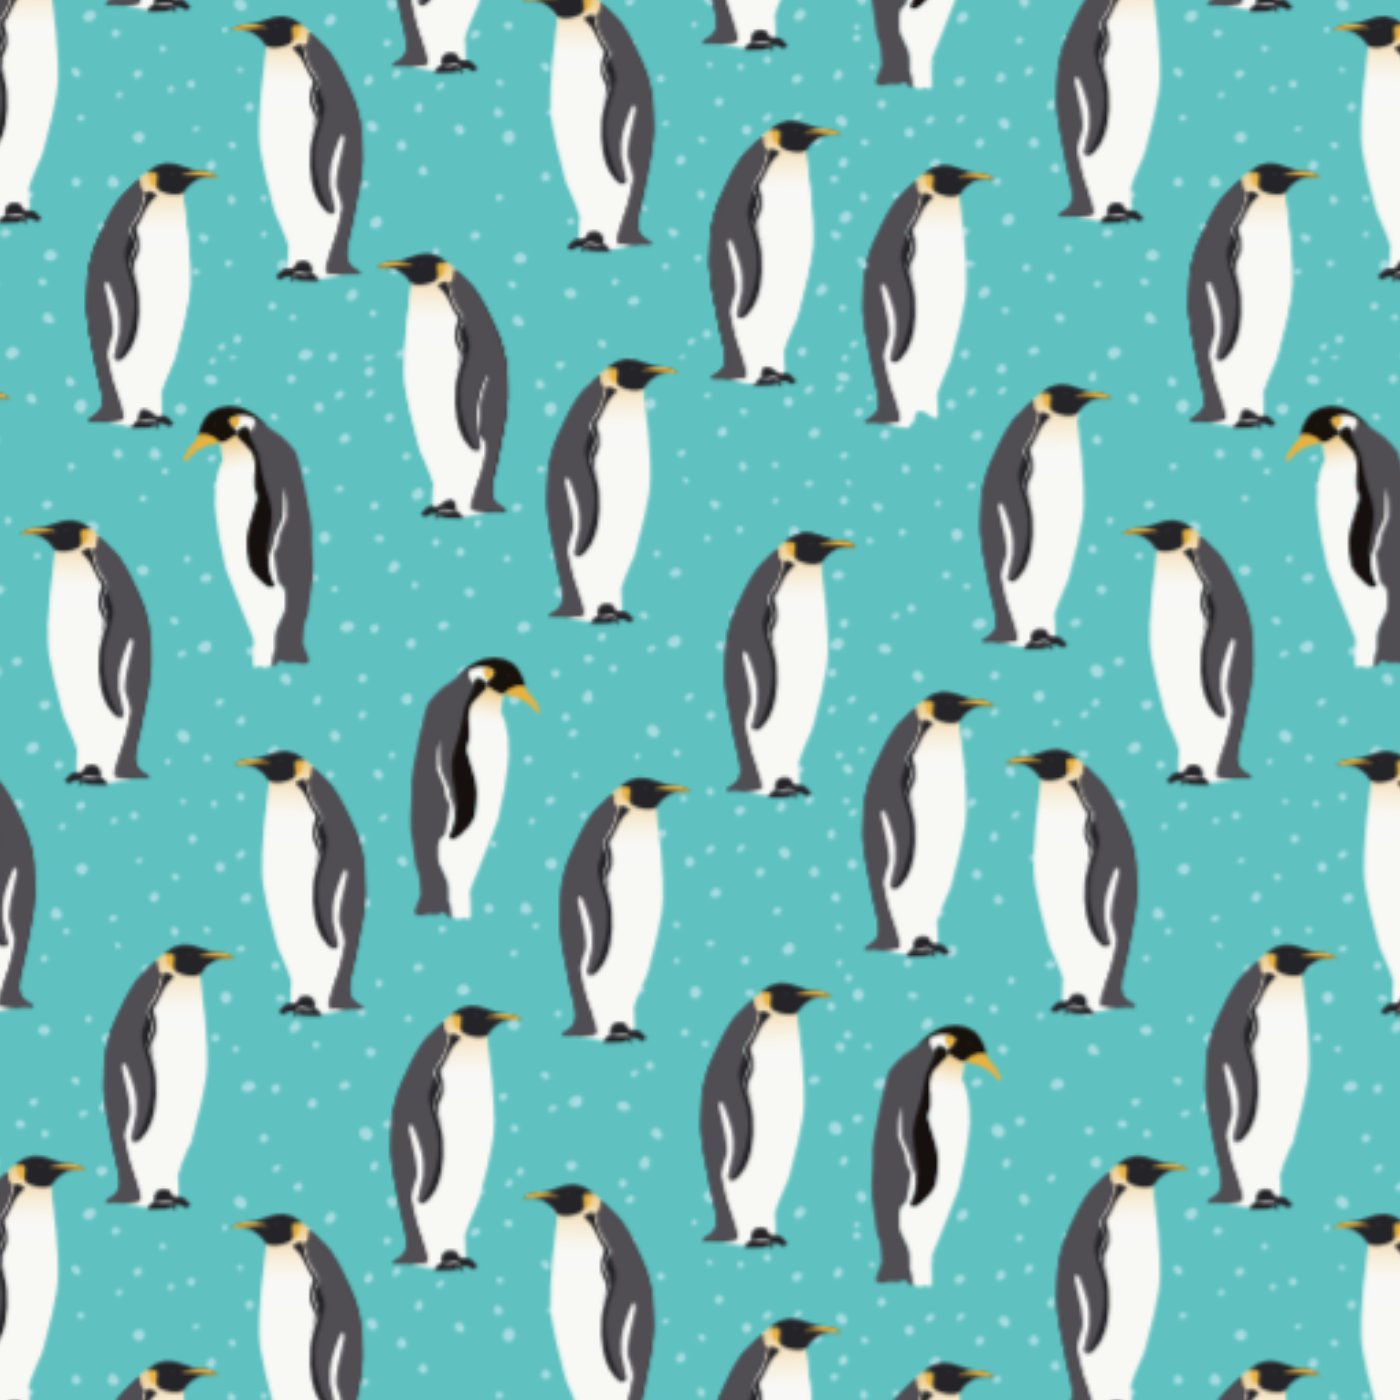 Waddle-Emperor-Penguin-Penguins-Animal-Print-Kitsch-Vintage-Inspired-RainbowsAndFairies.com.au-WADDL_ORG-01